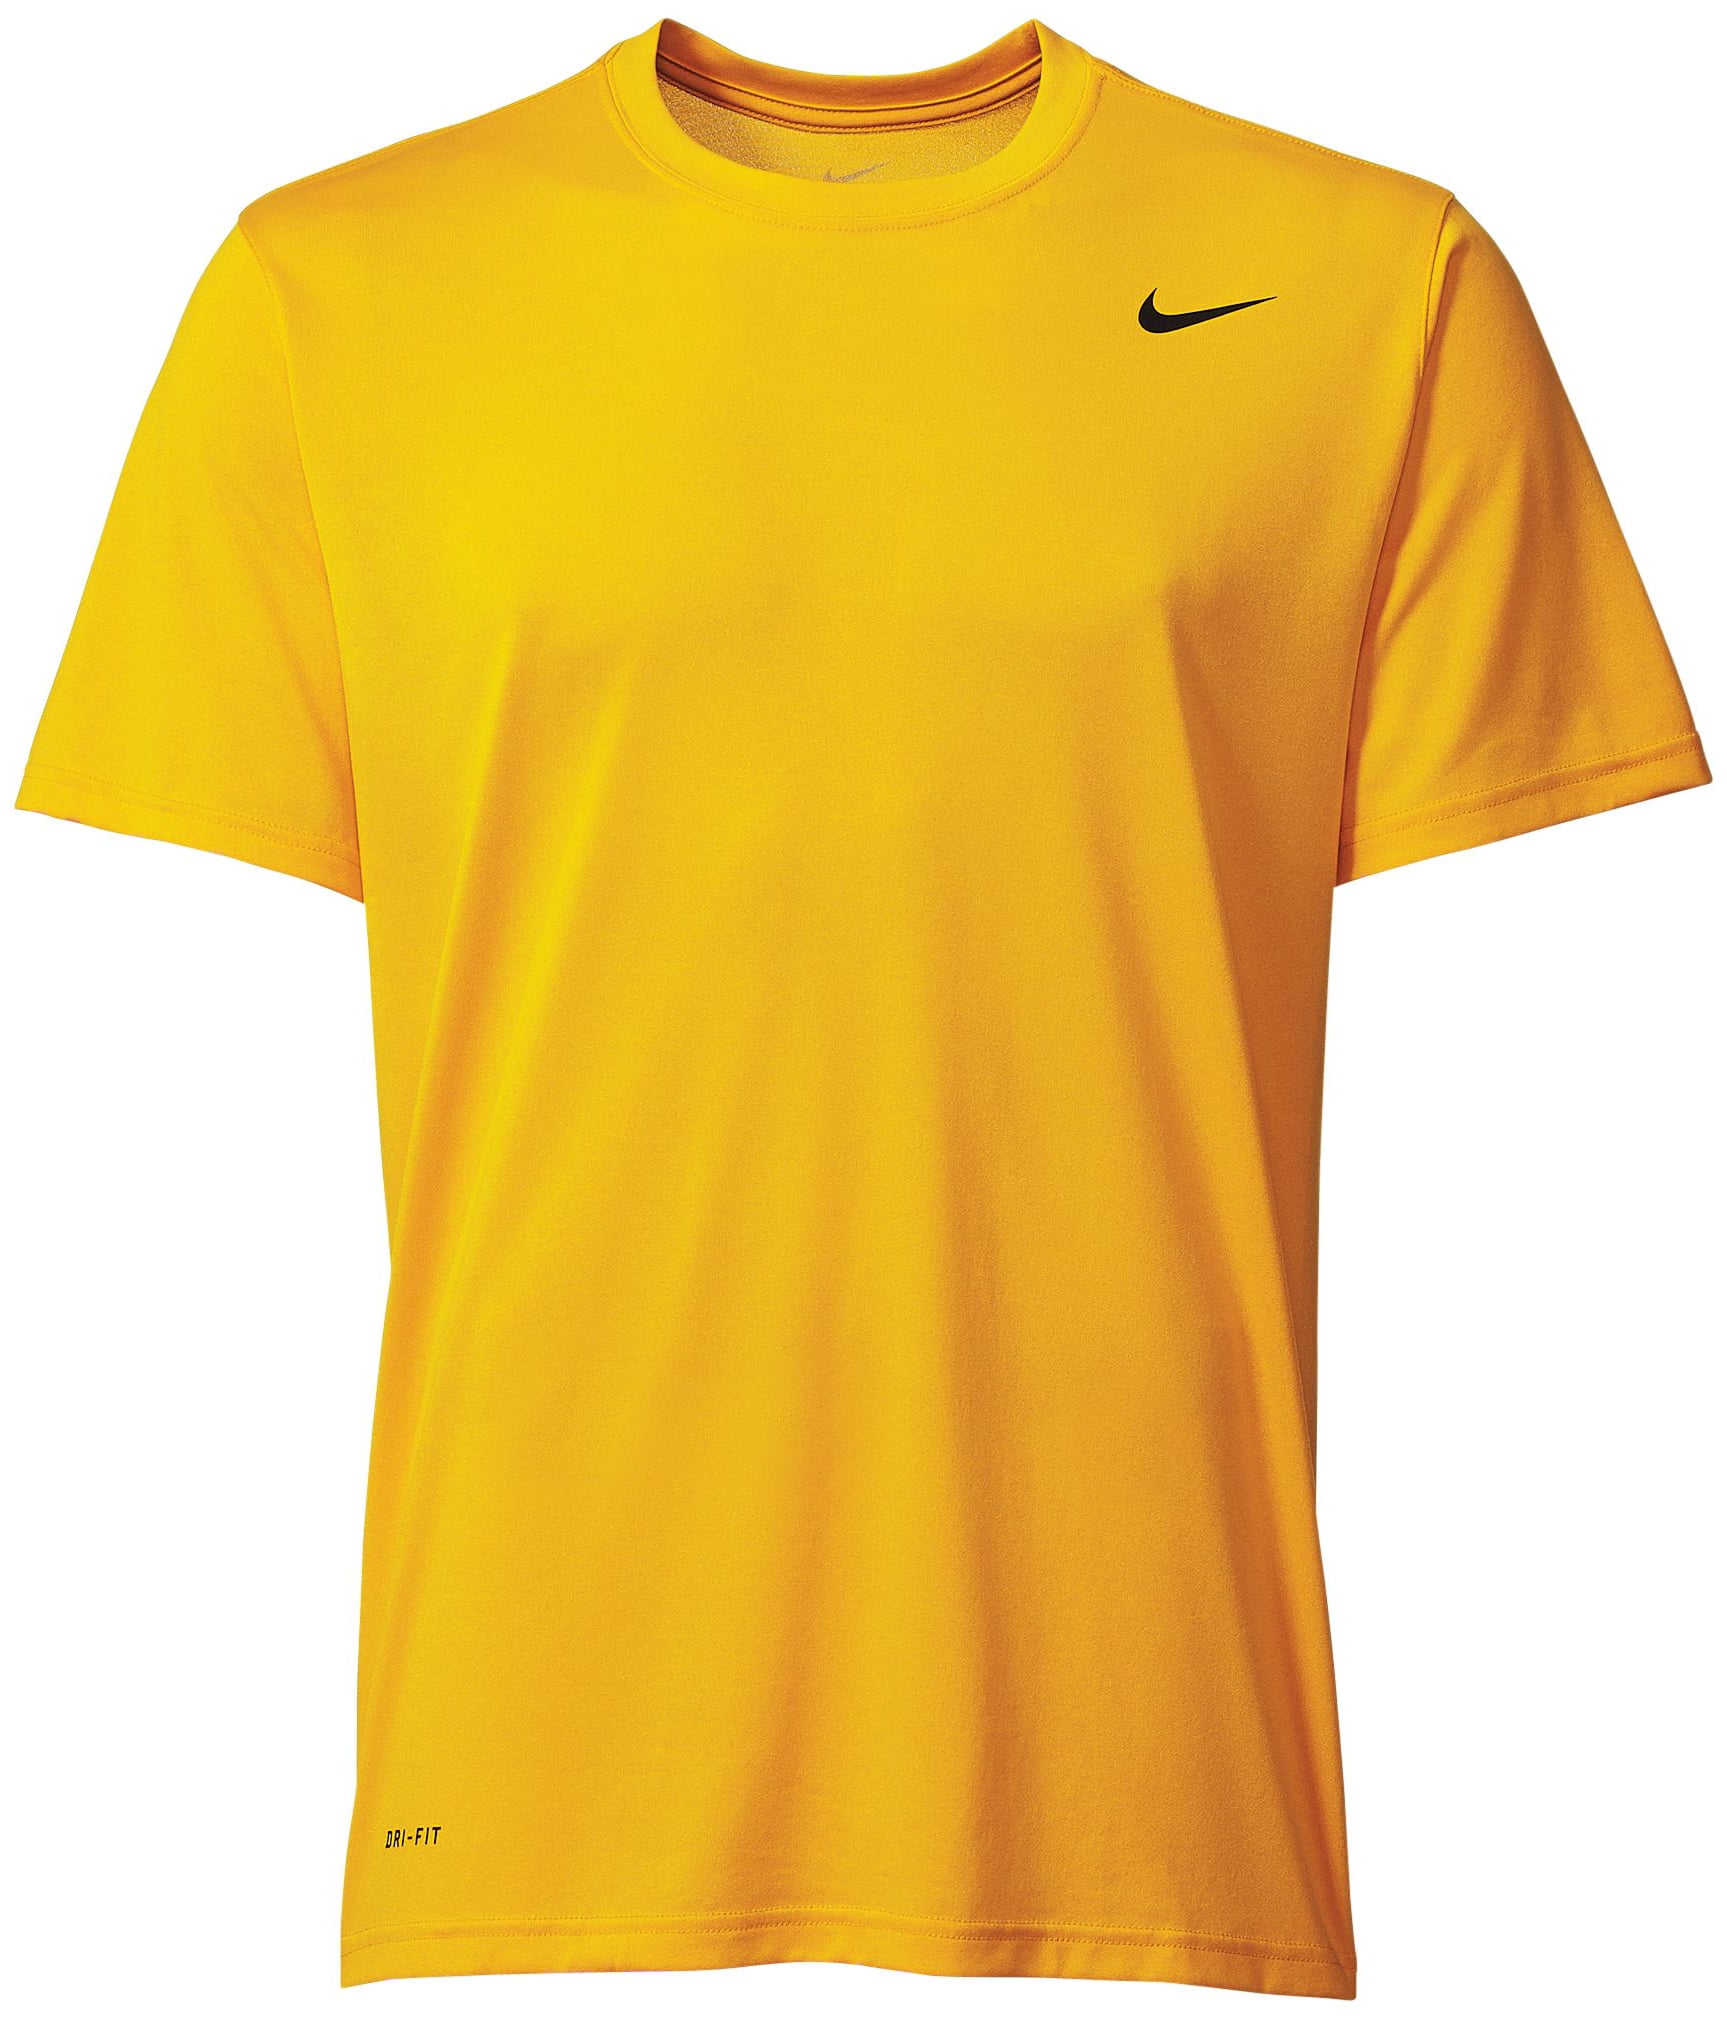 Nike Men's Legend 2.0 Dri-Fit Training Shirt Yellow Size XL 718833 